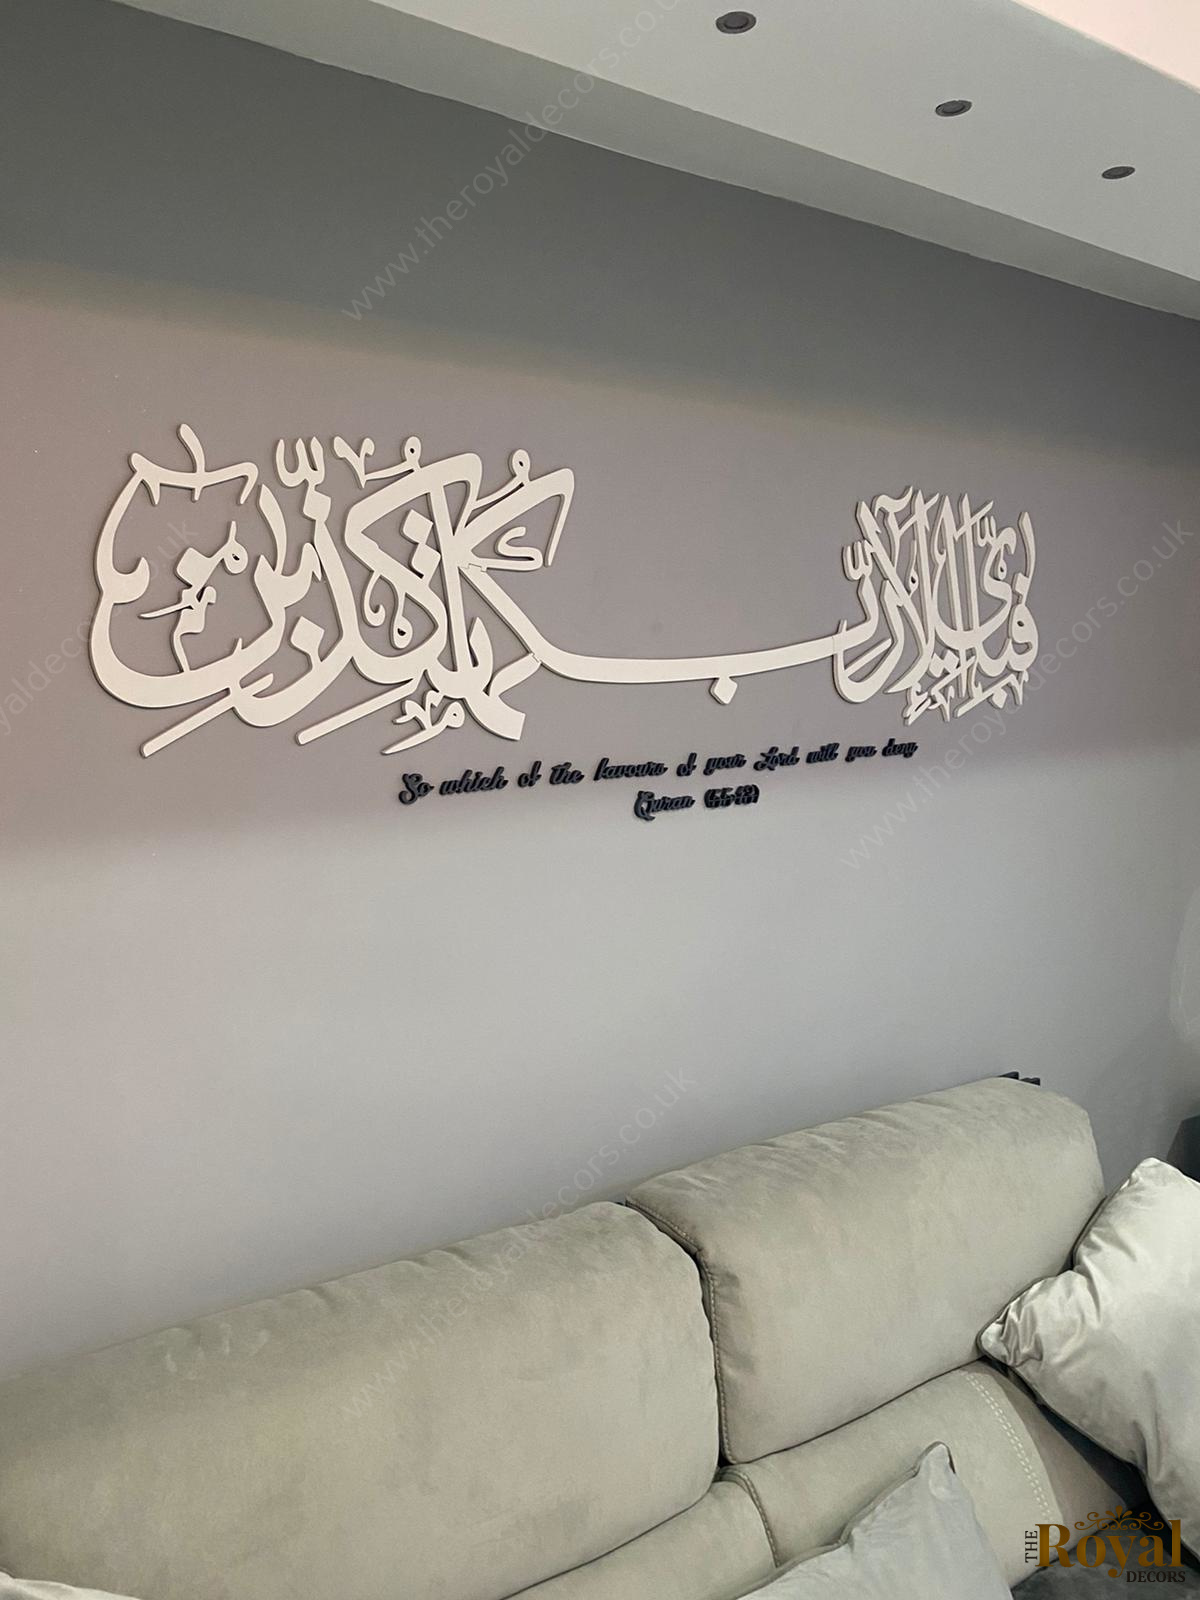 3D modern and unique Surah Rahman fabi Aayi alai Rabbikuma tukazziban islamic calligraphy wall art with english translation home decor